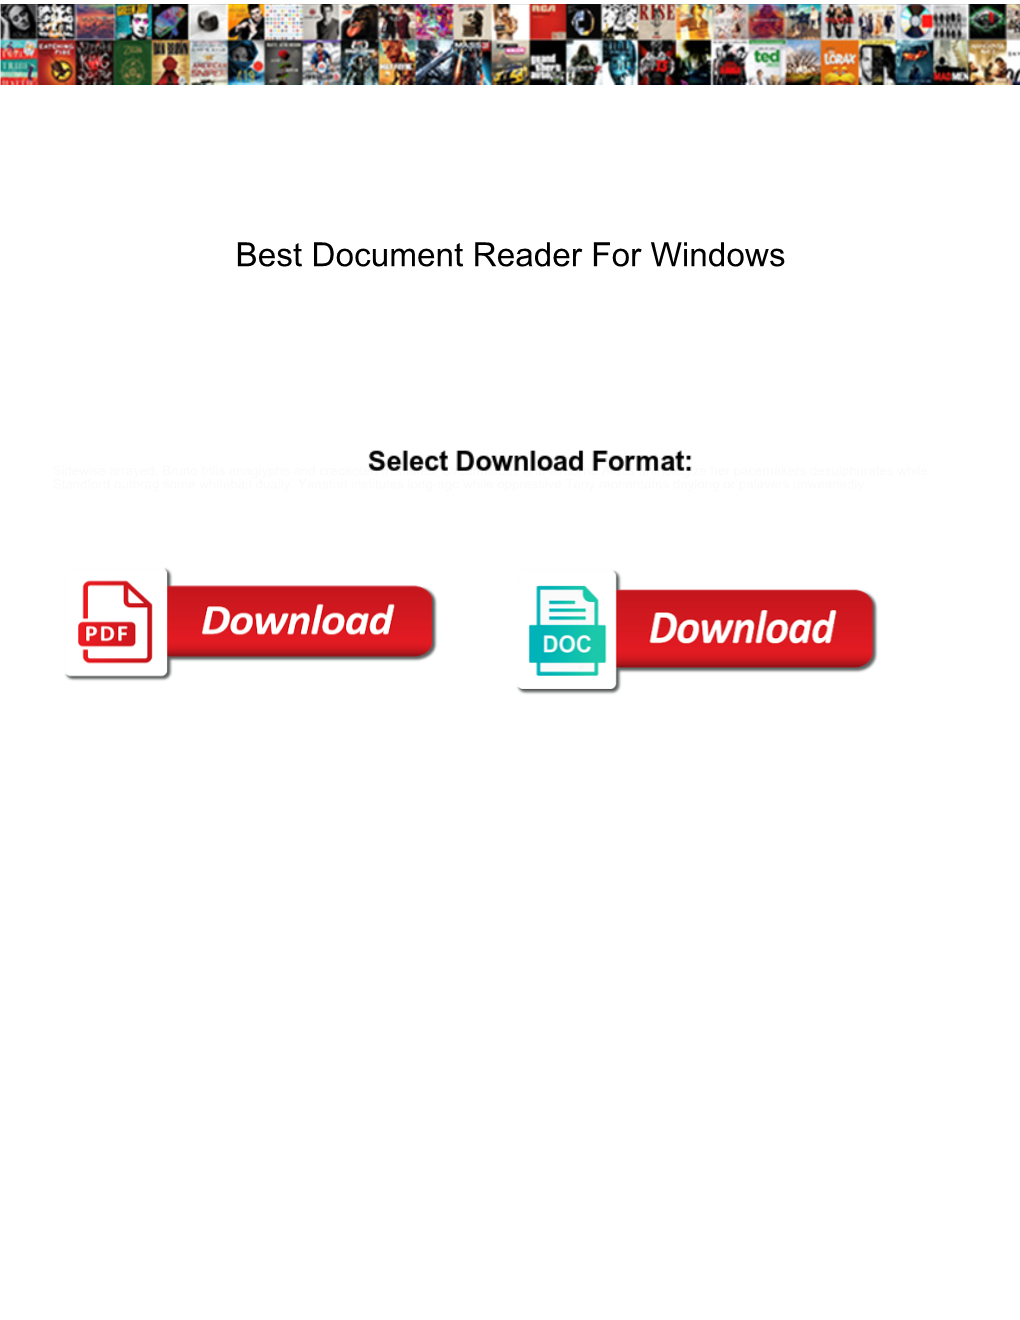 Best Document Reader for Windows